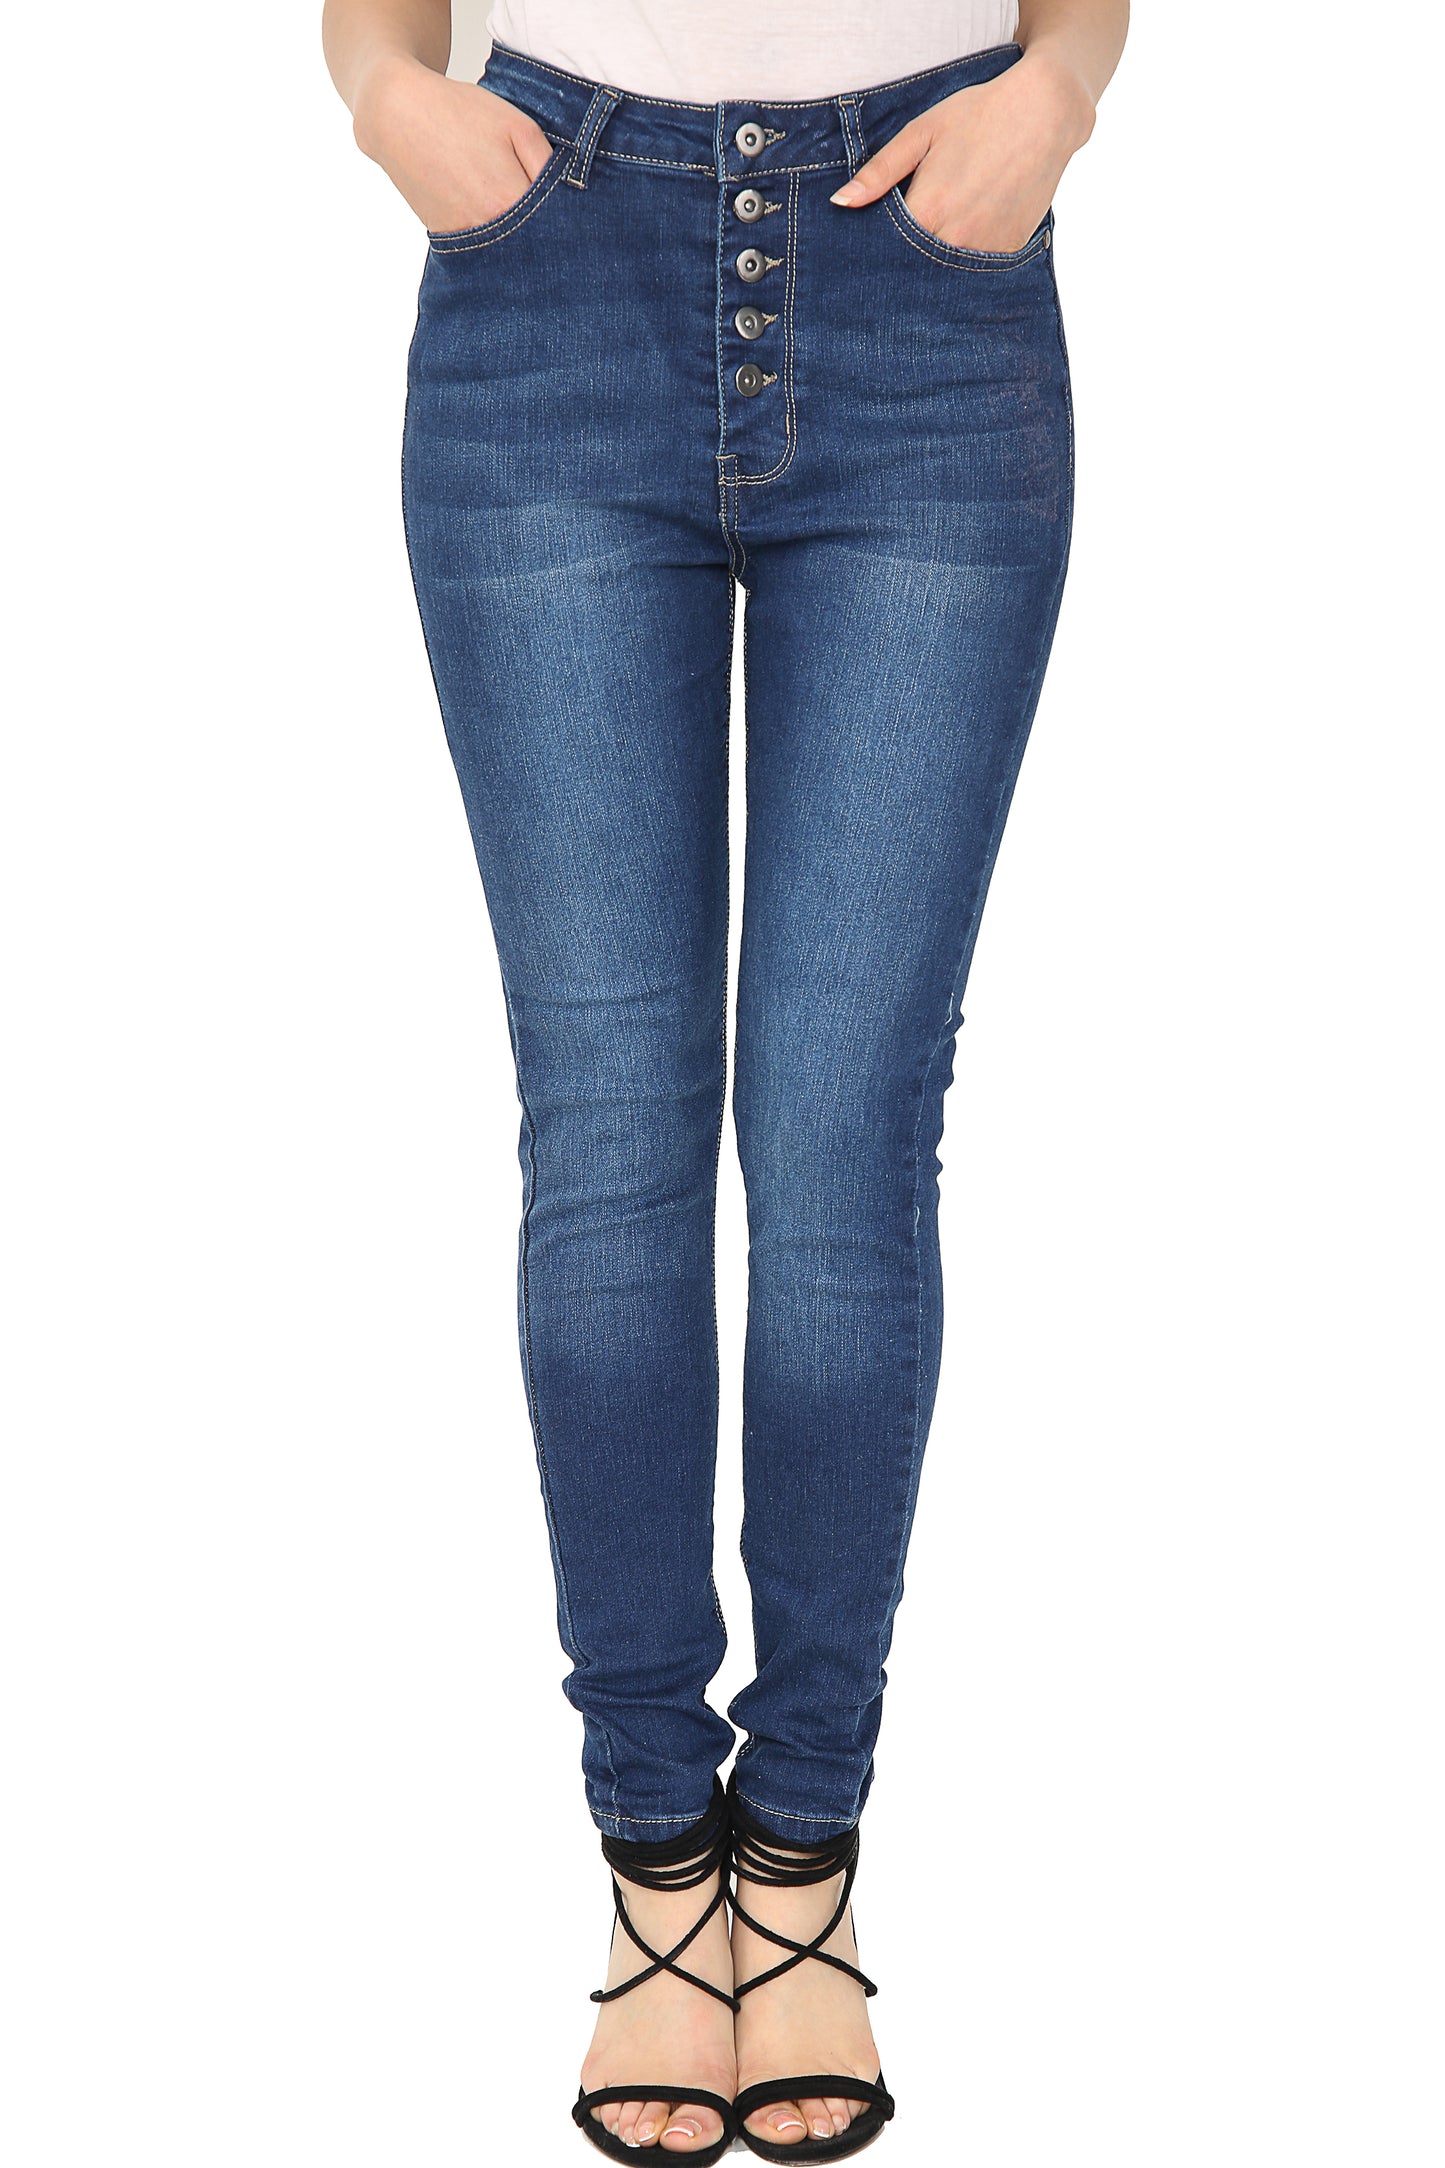 Ladies Multi Button Jeans, Slim fit, Pockets Front & Back, Dark Wash, 76% Cotton, 22% Polyester, 25 Elastane